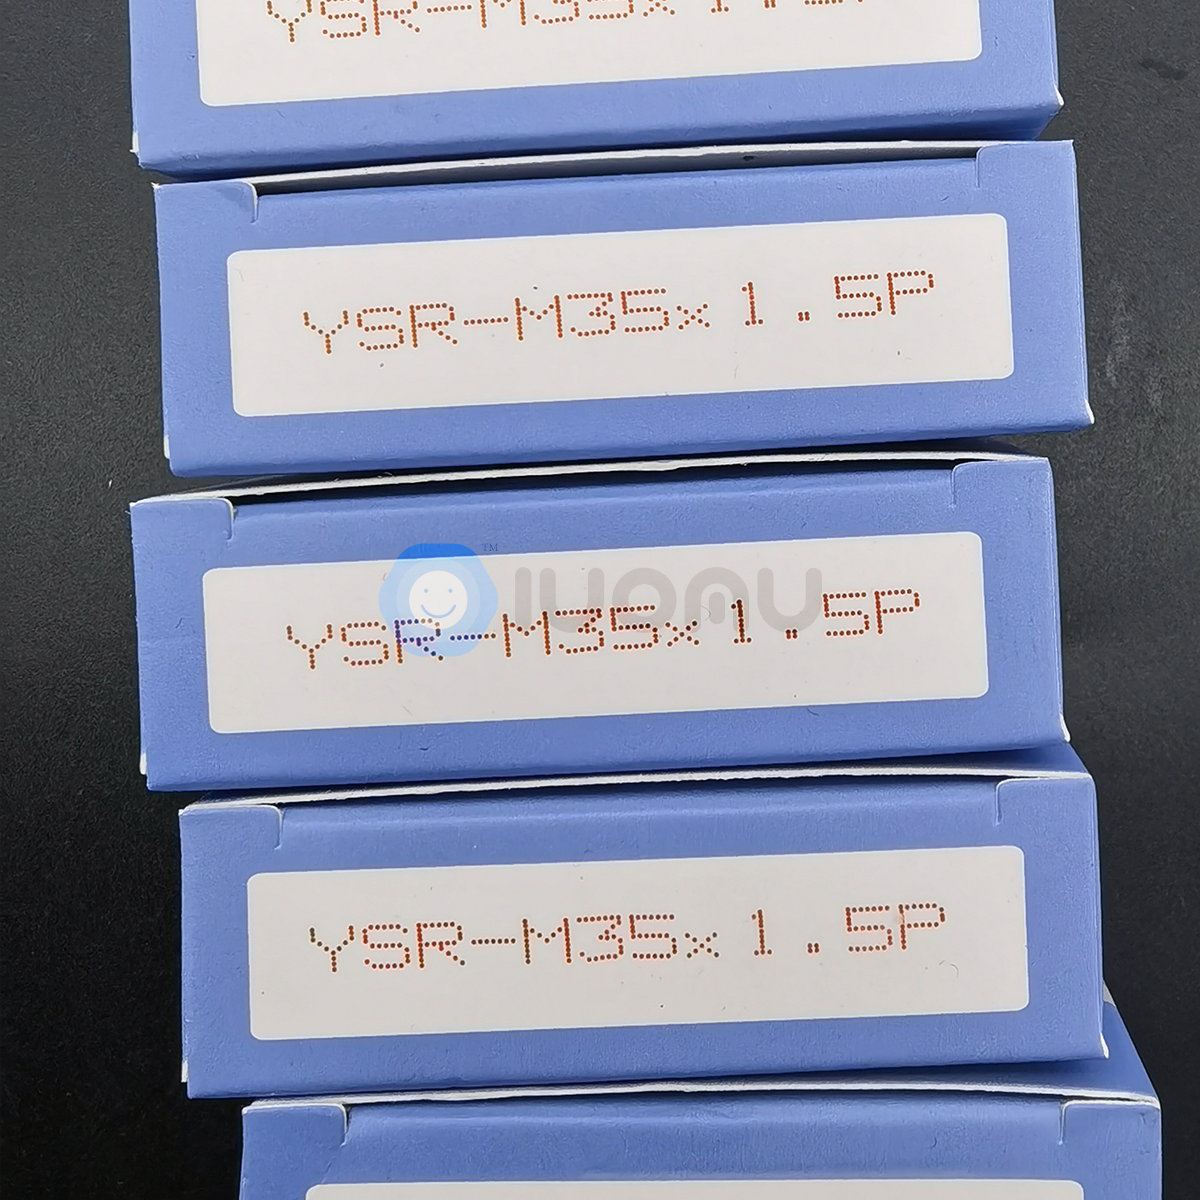 YINSH 盈锡 YSR-M35×1.5P 径向锁紧螺母 LMP800076 - 螺母网